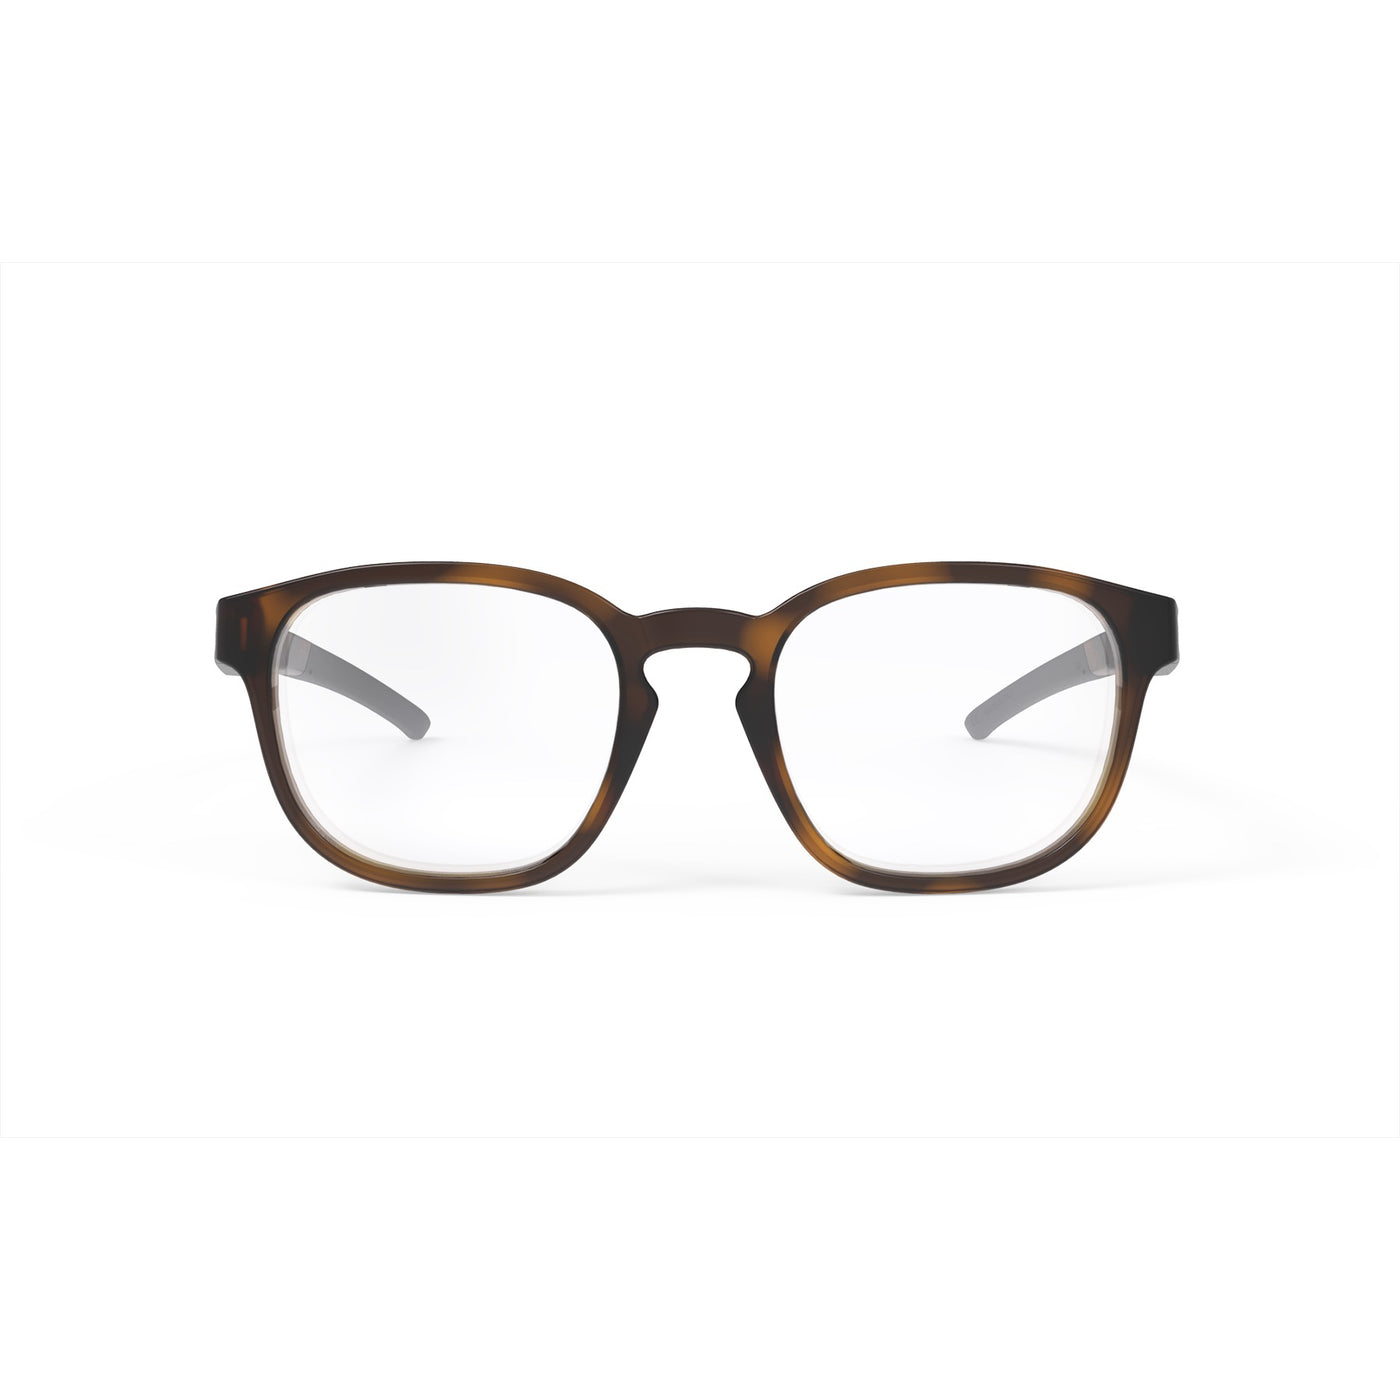 Rudy Project ophthalmic prescription eyeglass frames#color_iridis-66-demi-gloss